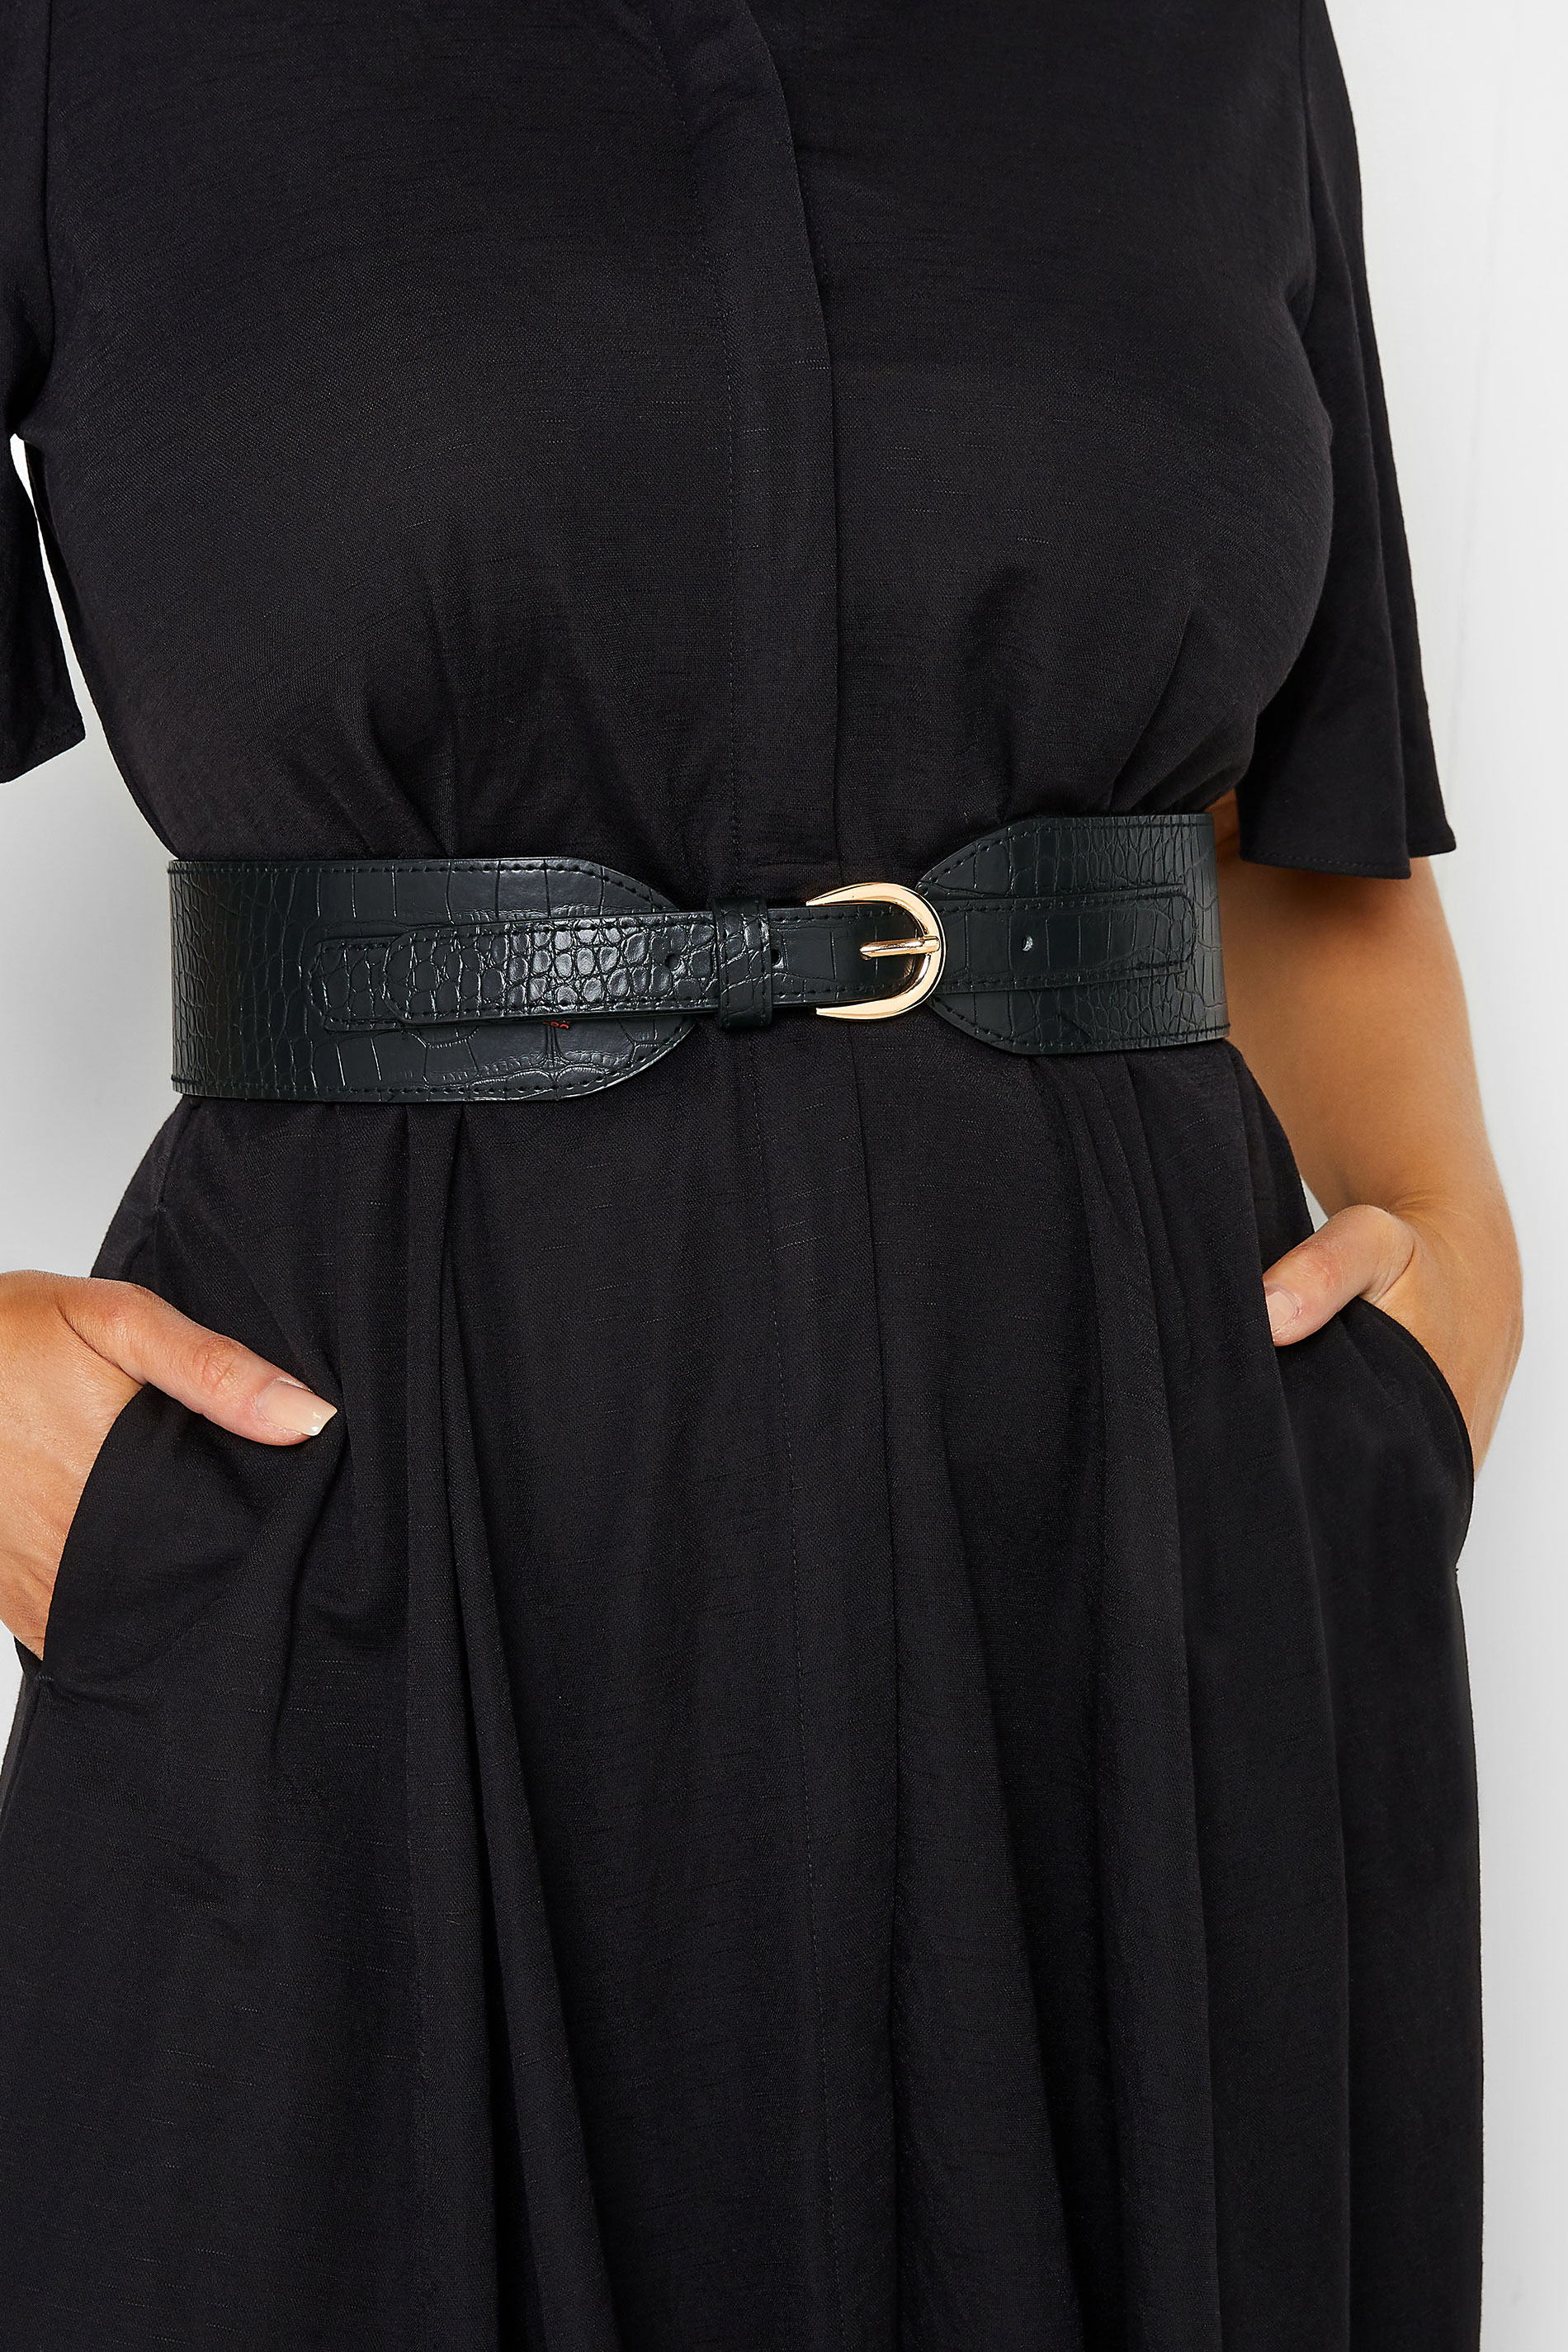 Black & Gold Croc Stretch Wide Belt | Yours Clothing 1